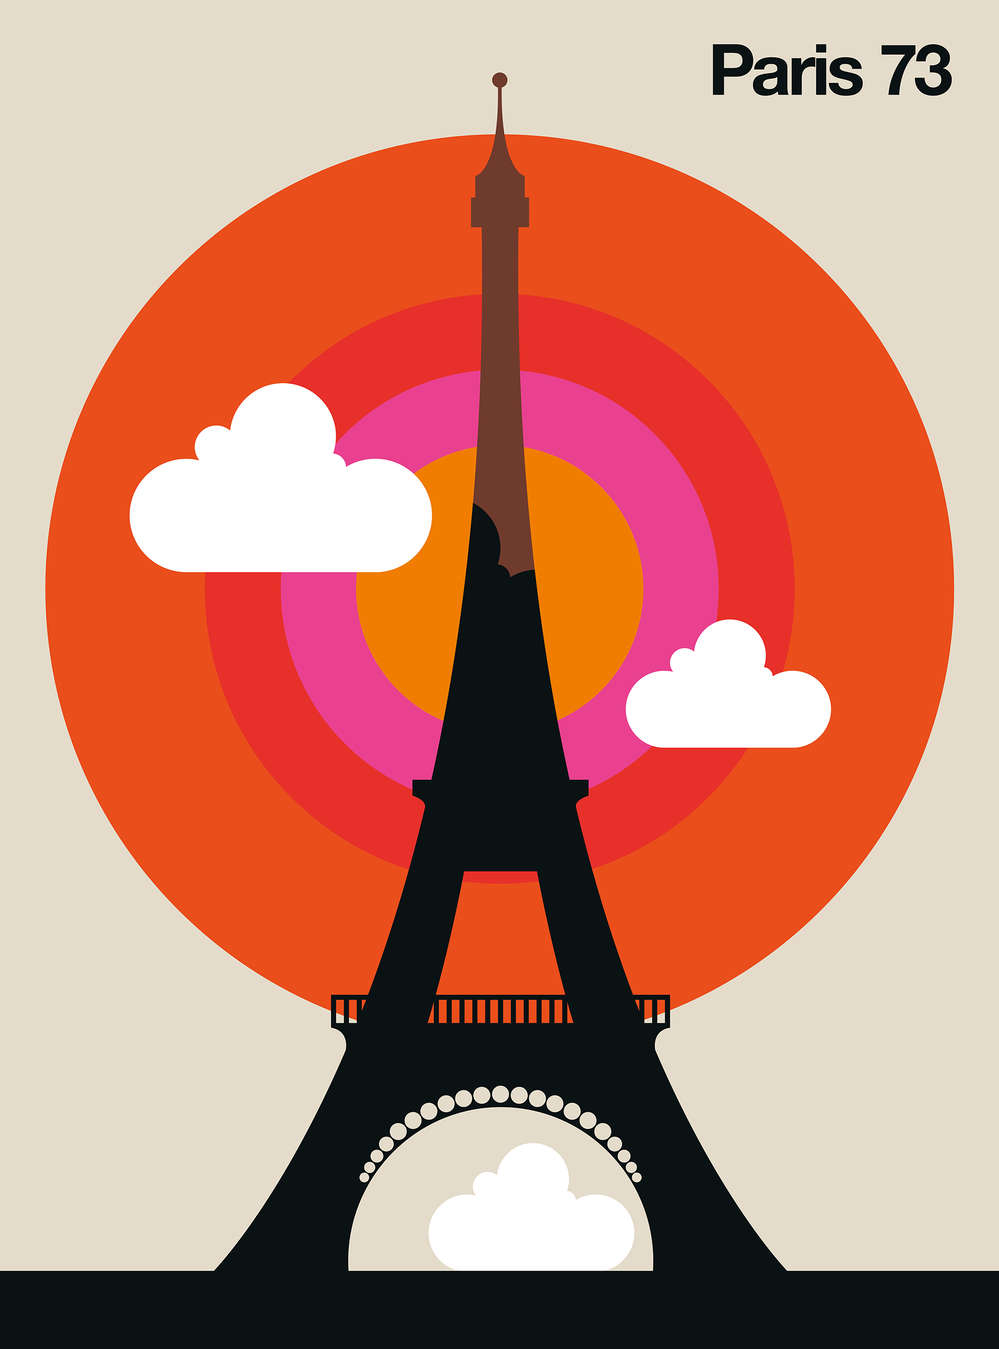             Fotomurali Parigi con motivo Torre Eiffel in stile retrò
        